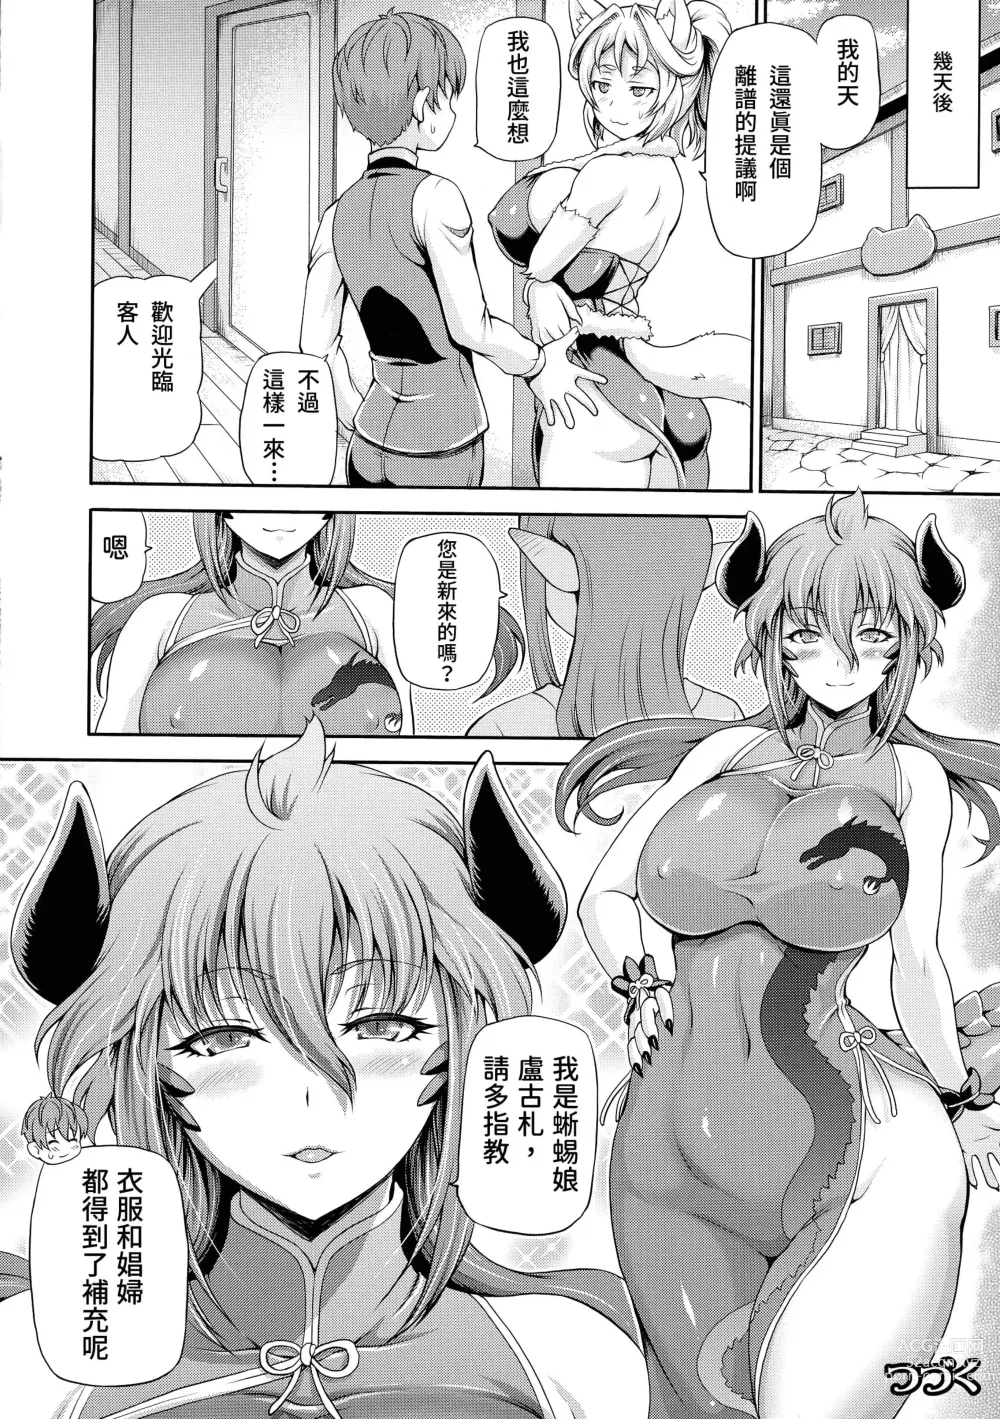 Page 24 of manga Isekai Shoukan 2 Ch. 1-4, 6-8